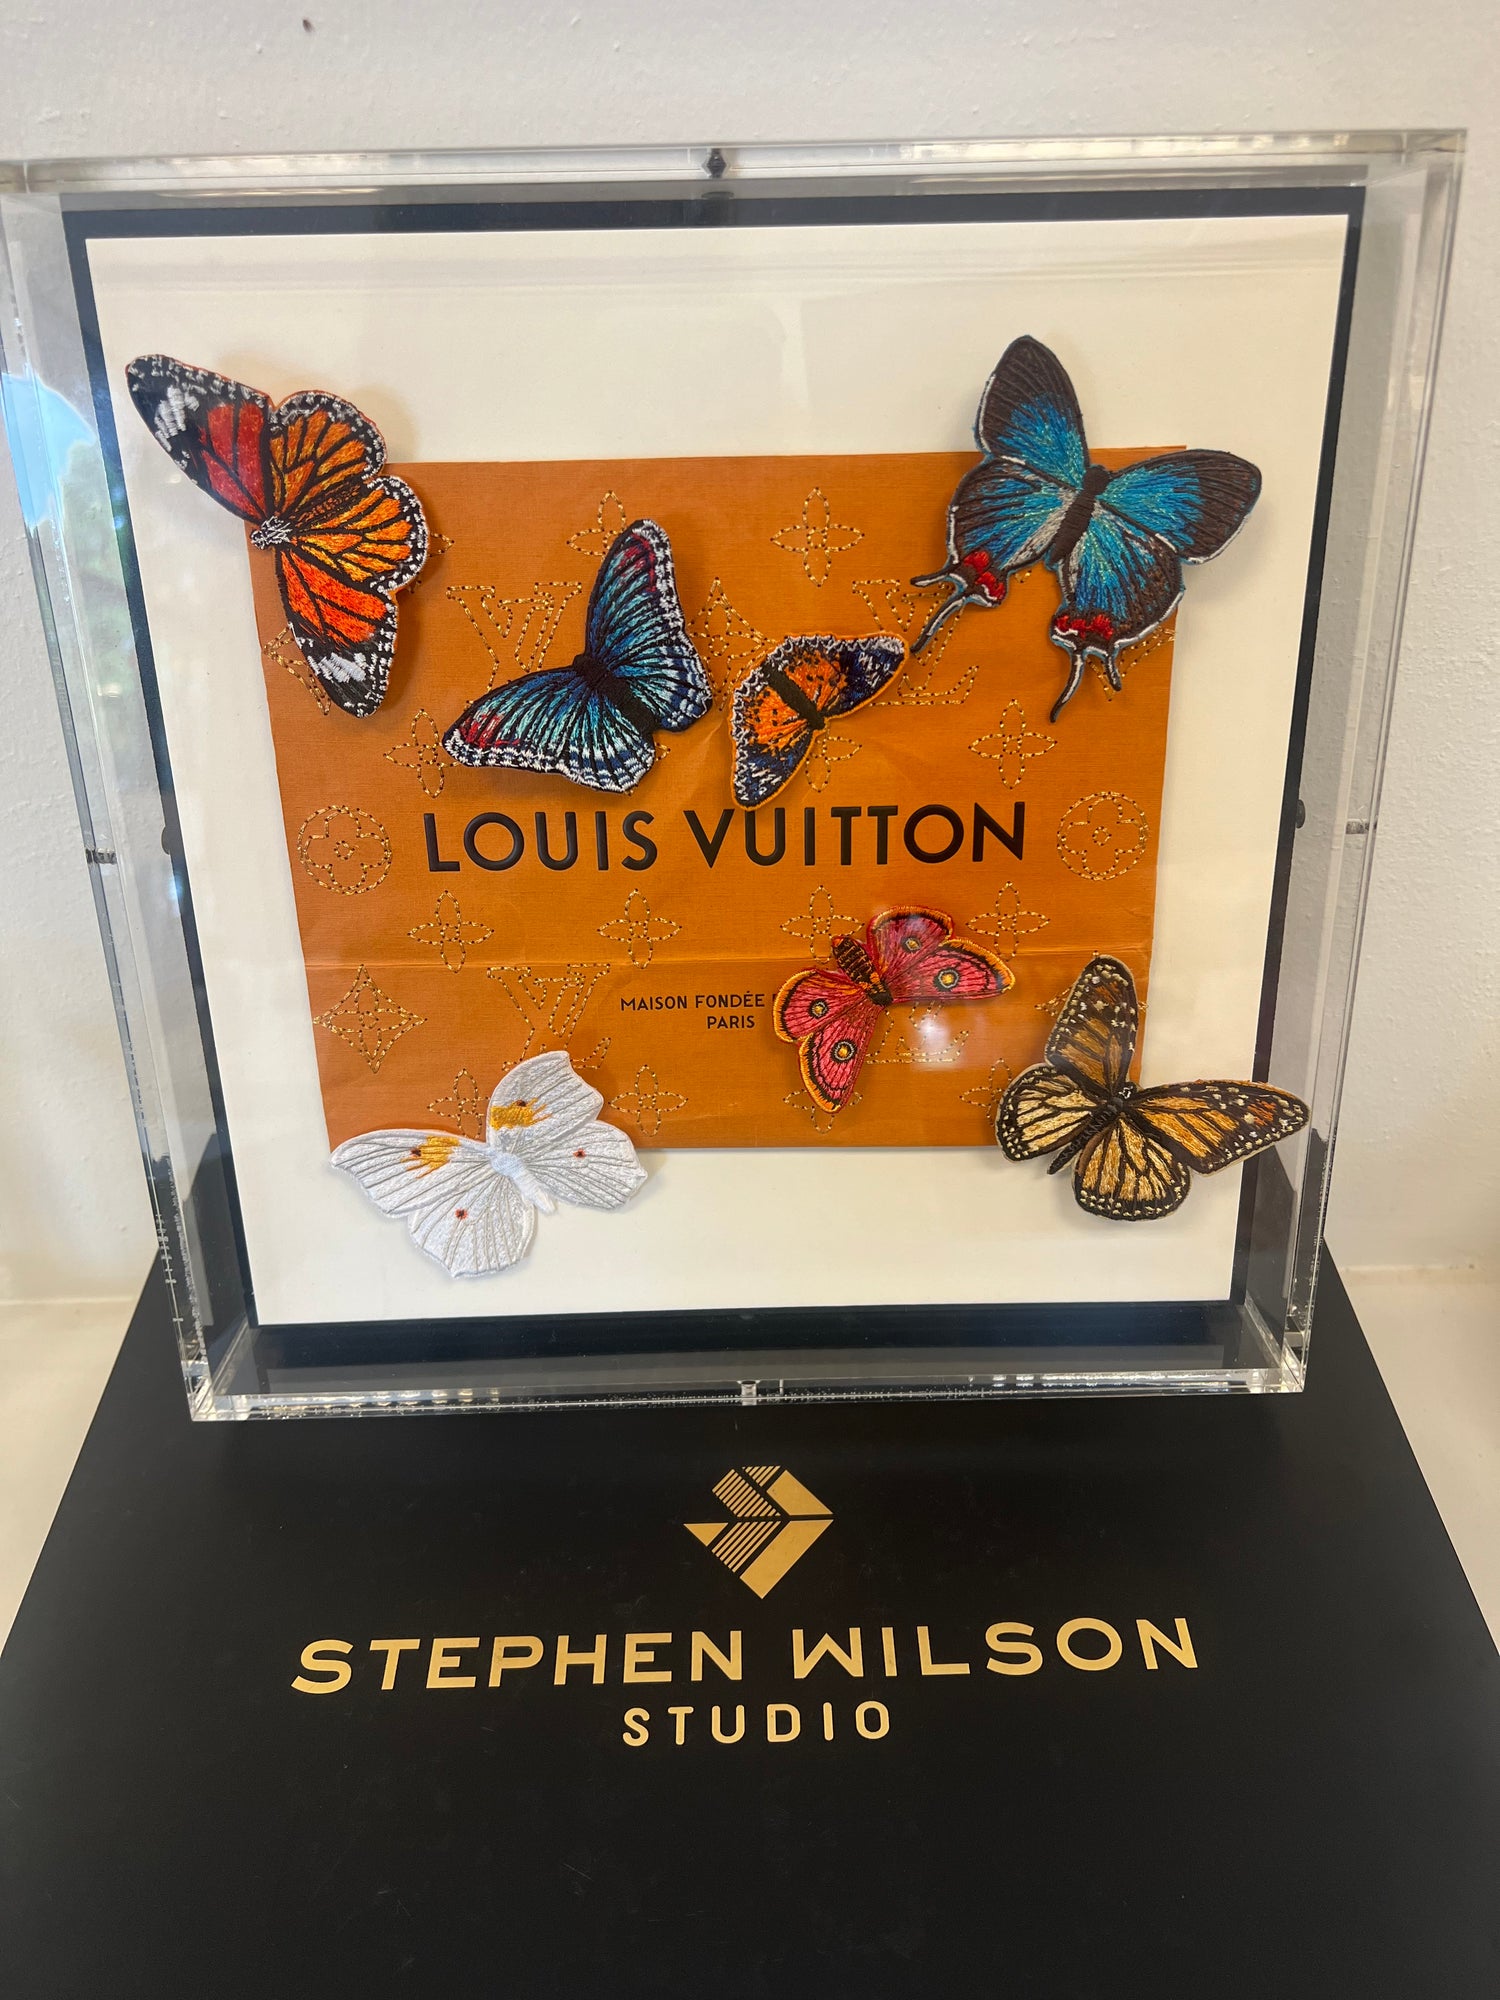 Stephen Wilson, Louie Vuitton